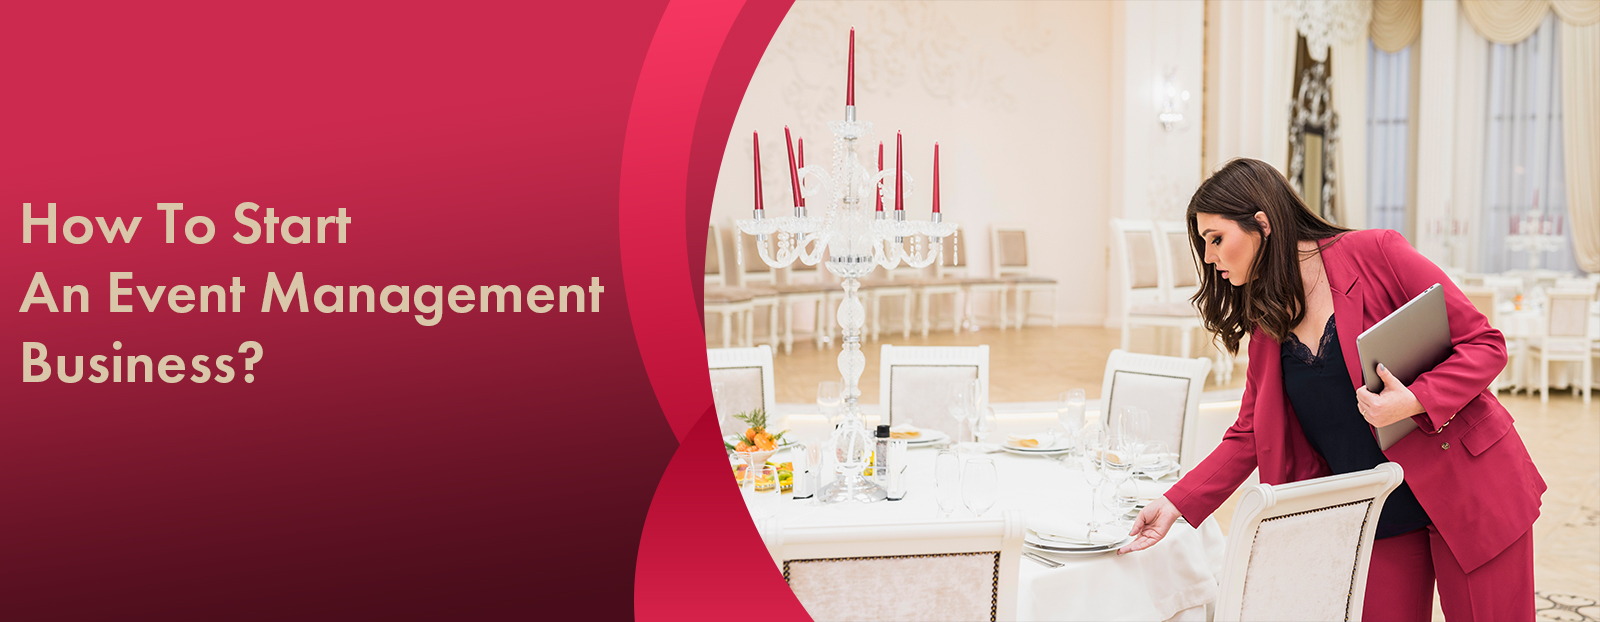 How To Start An Event Management Business?